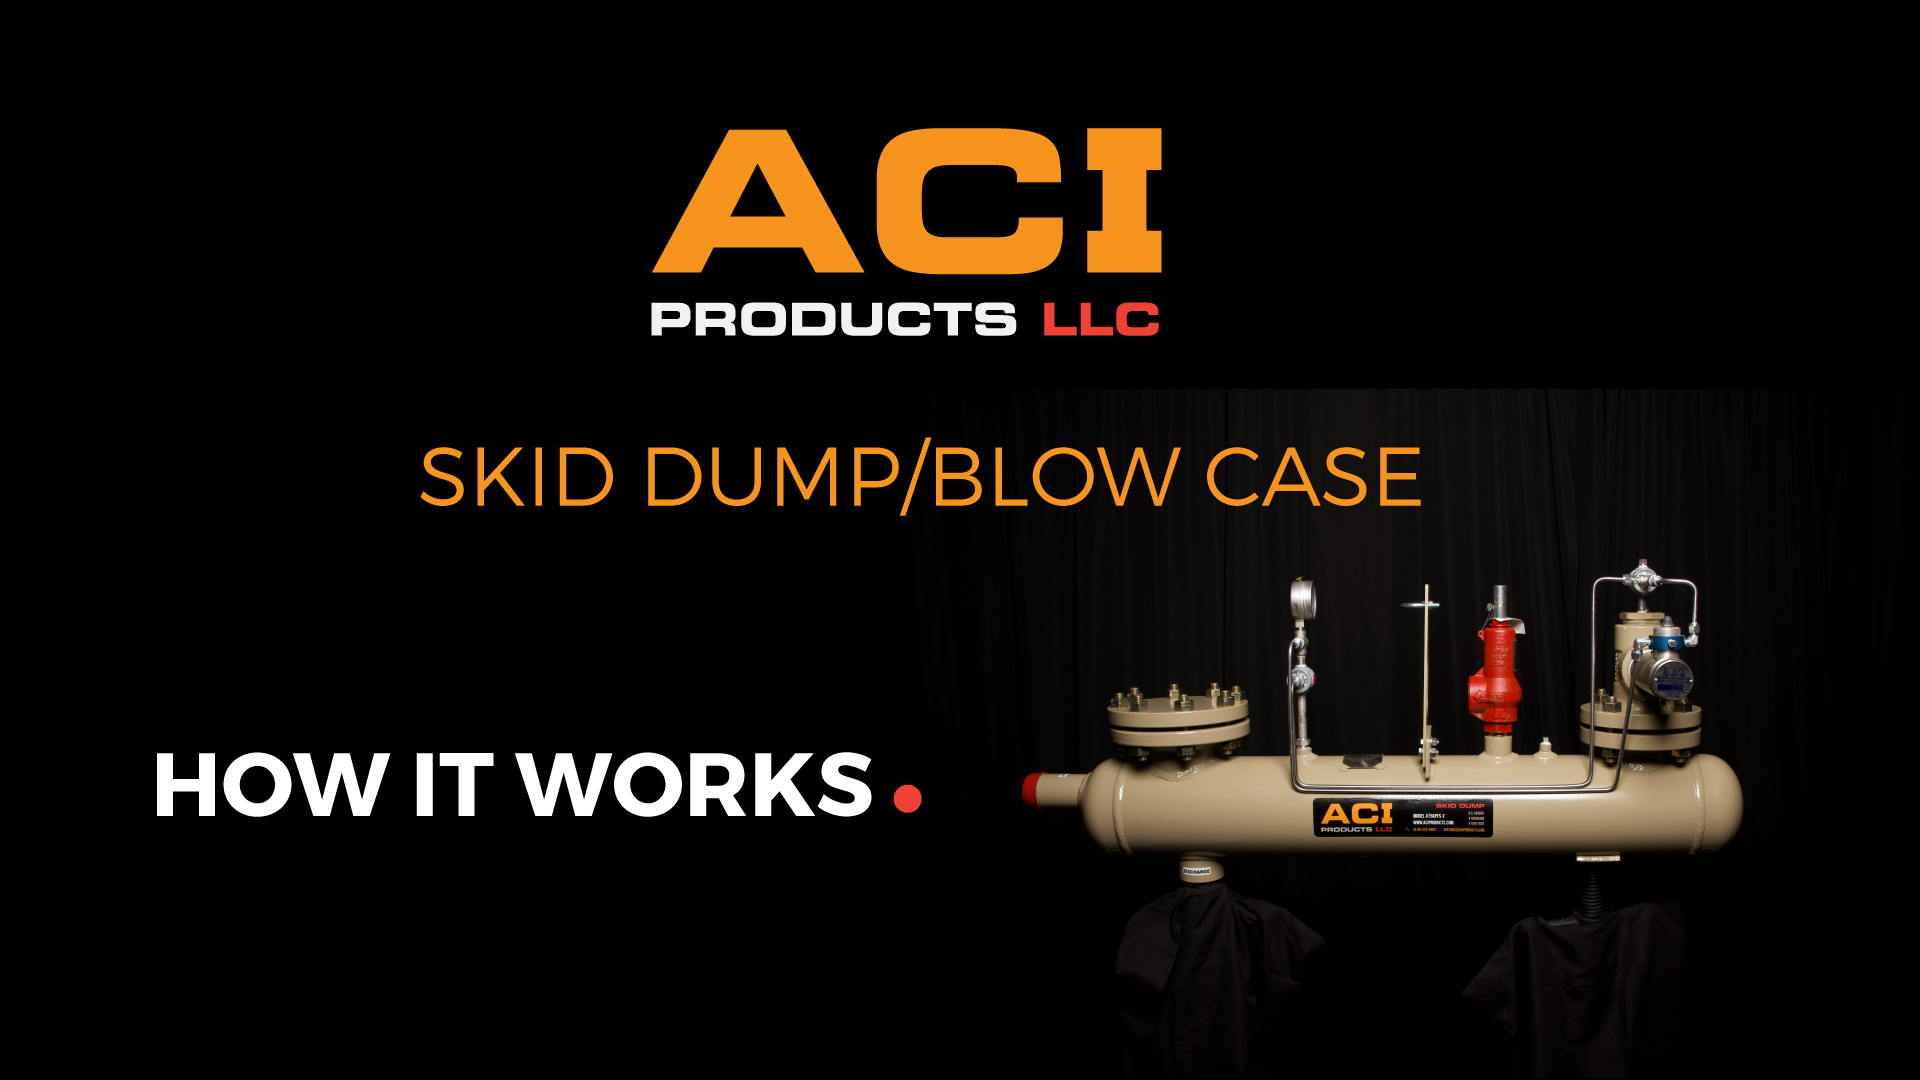 ACI products llc - Skid dump